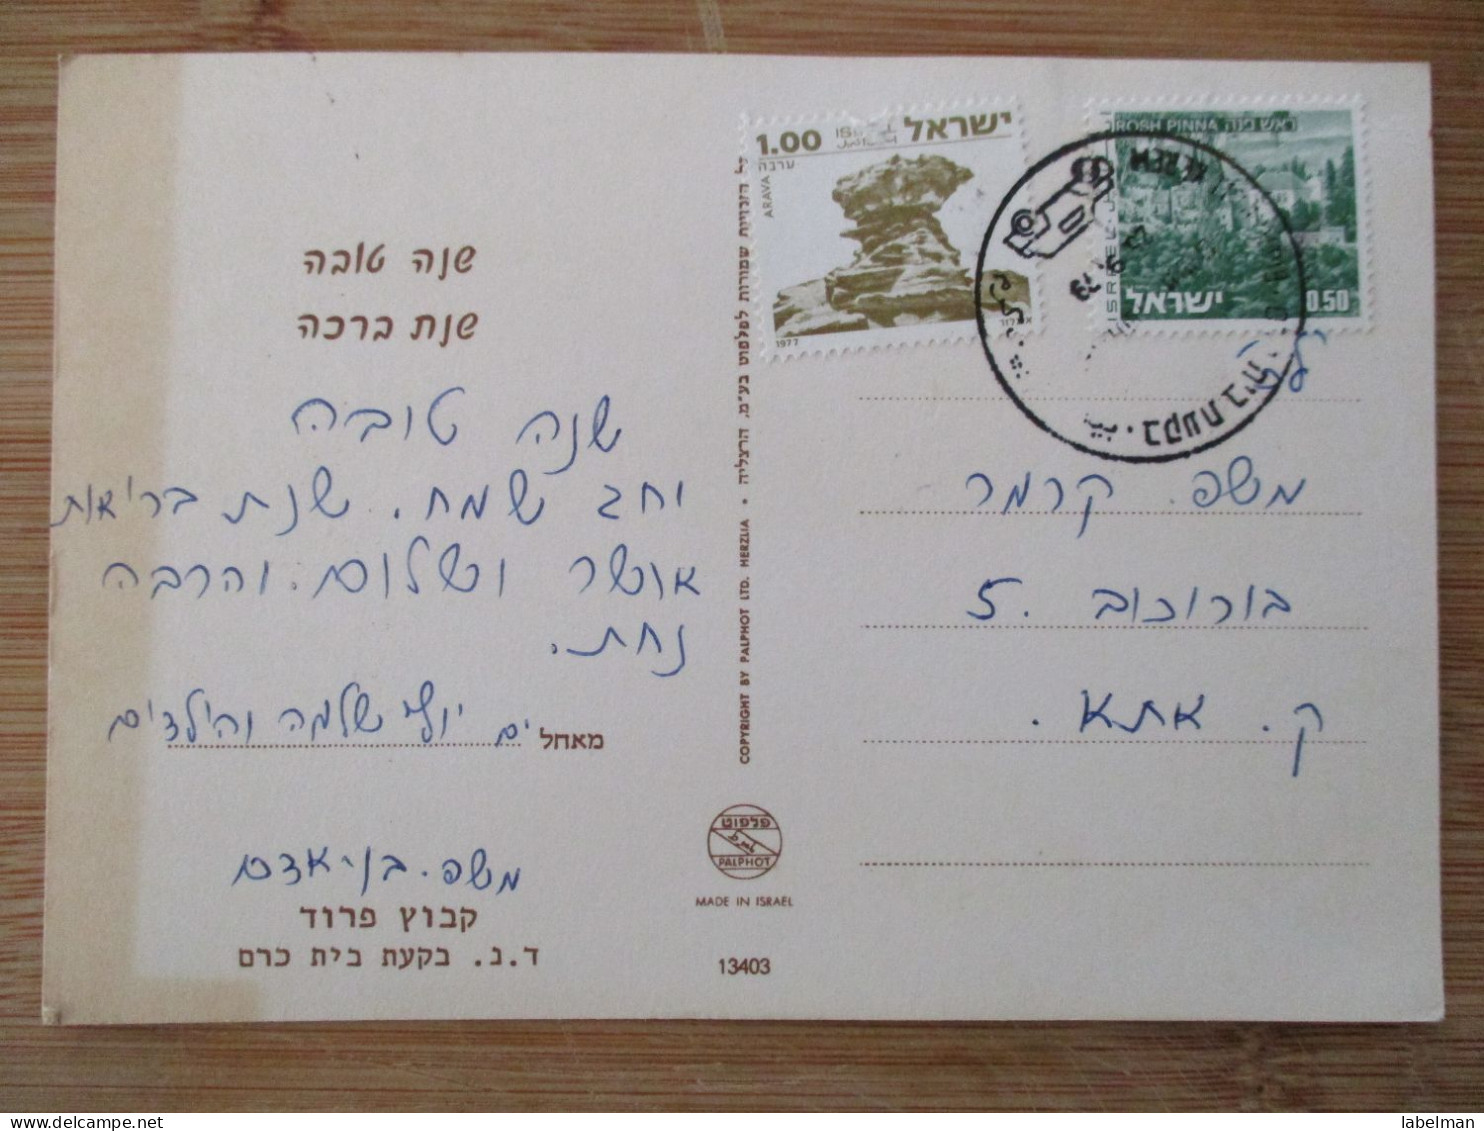 ISRAEL UPPER GALILEE KIBBUTZ PAROD SHANA TOVA NEW YEAR CARD POSTCARD CARTE POSTALE ANSICHTSKARTE CARTOLINA POSTKARTE - Israele